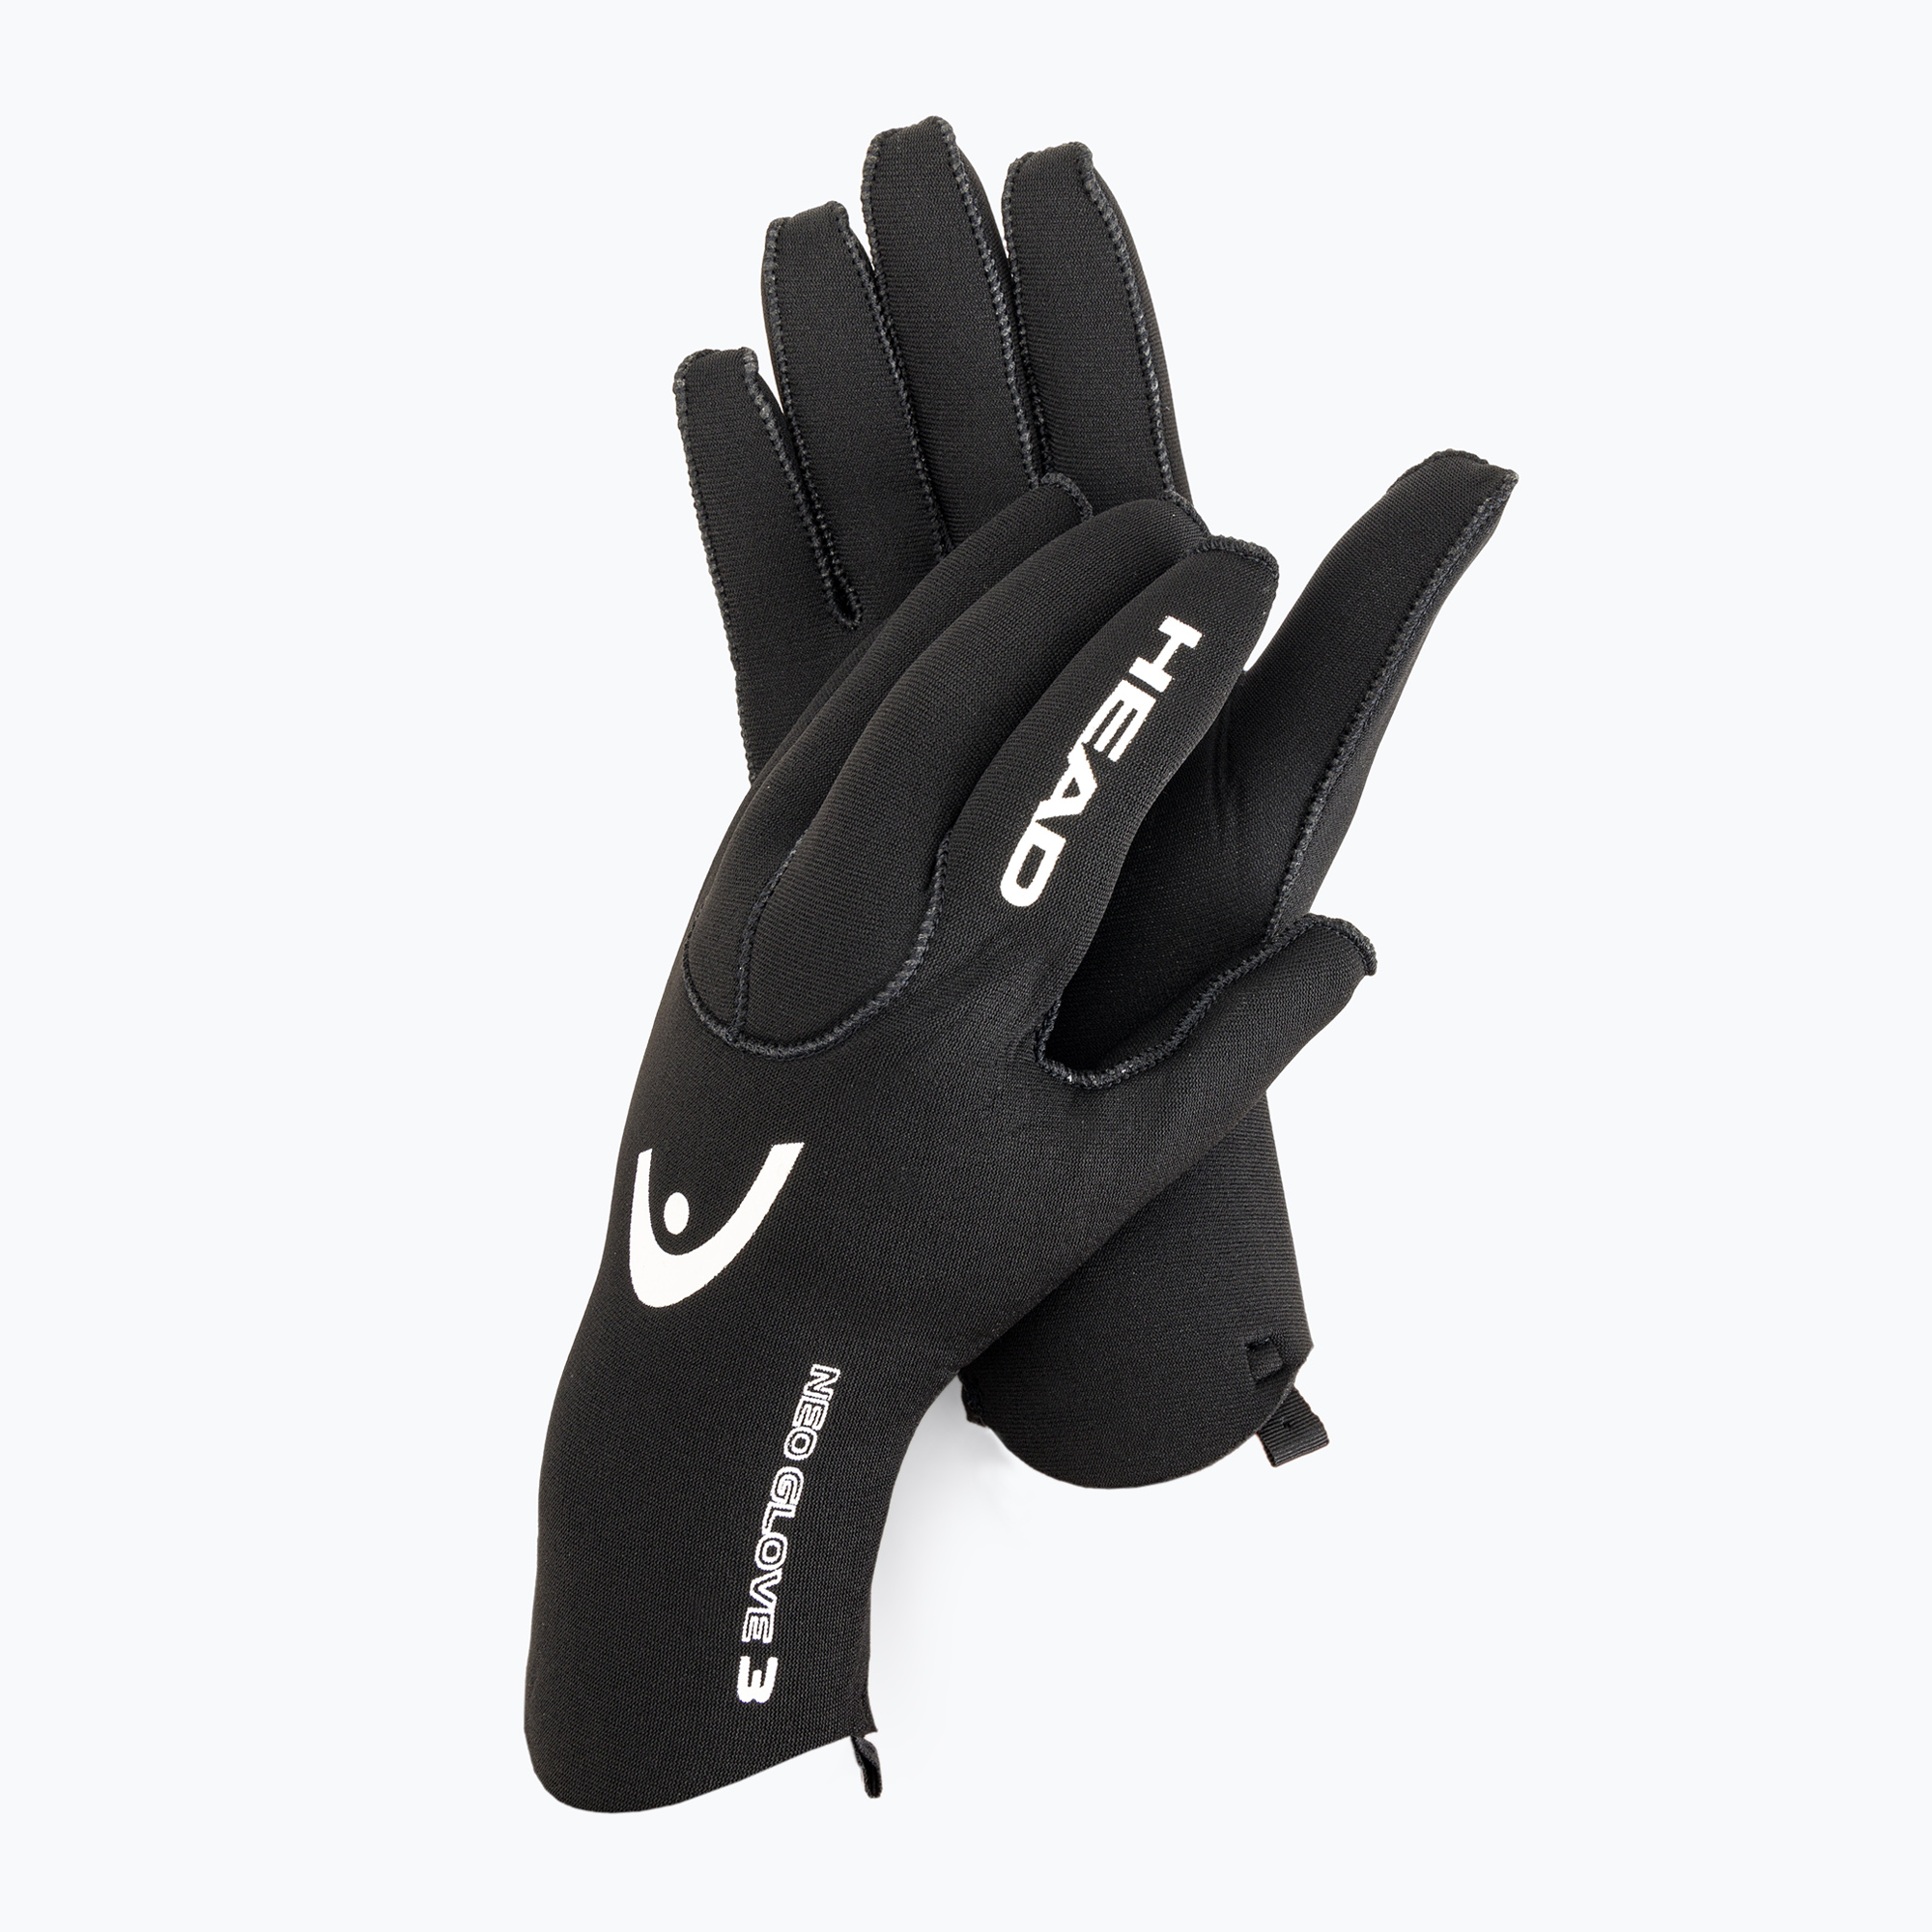 Mănuși din neopren HEAD Neo 3 black